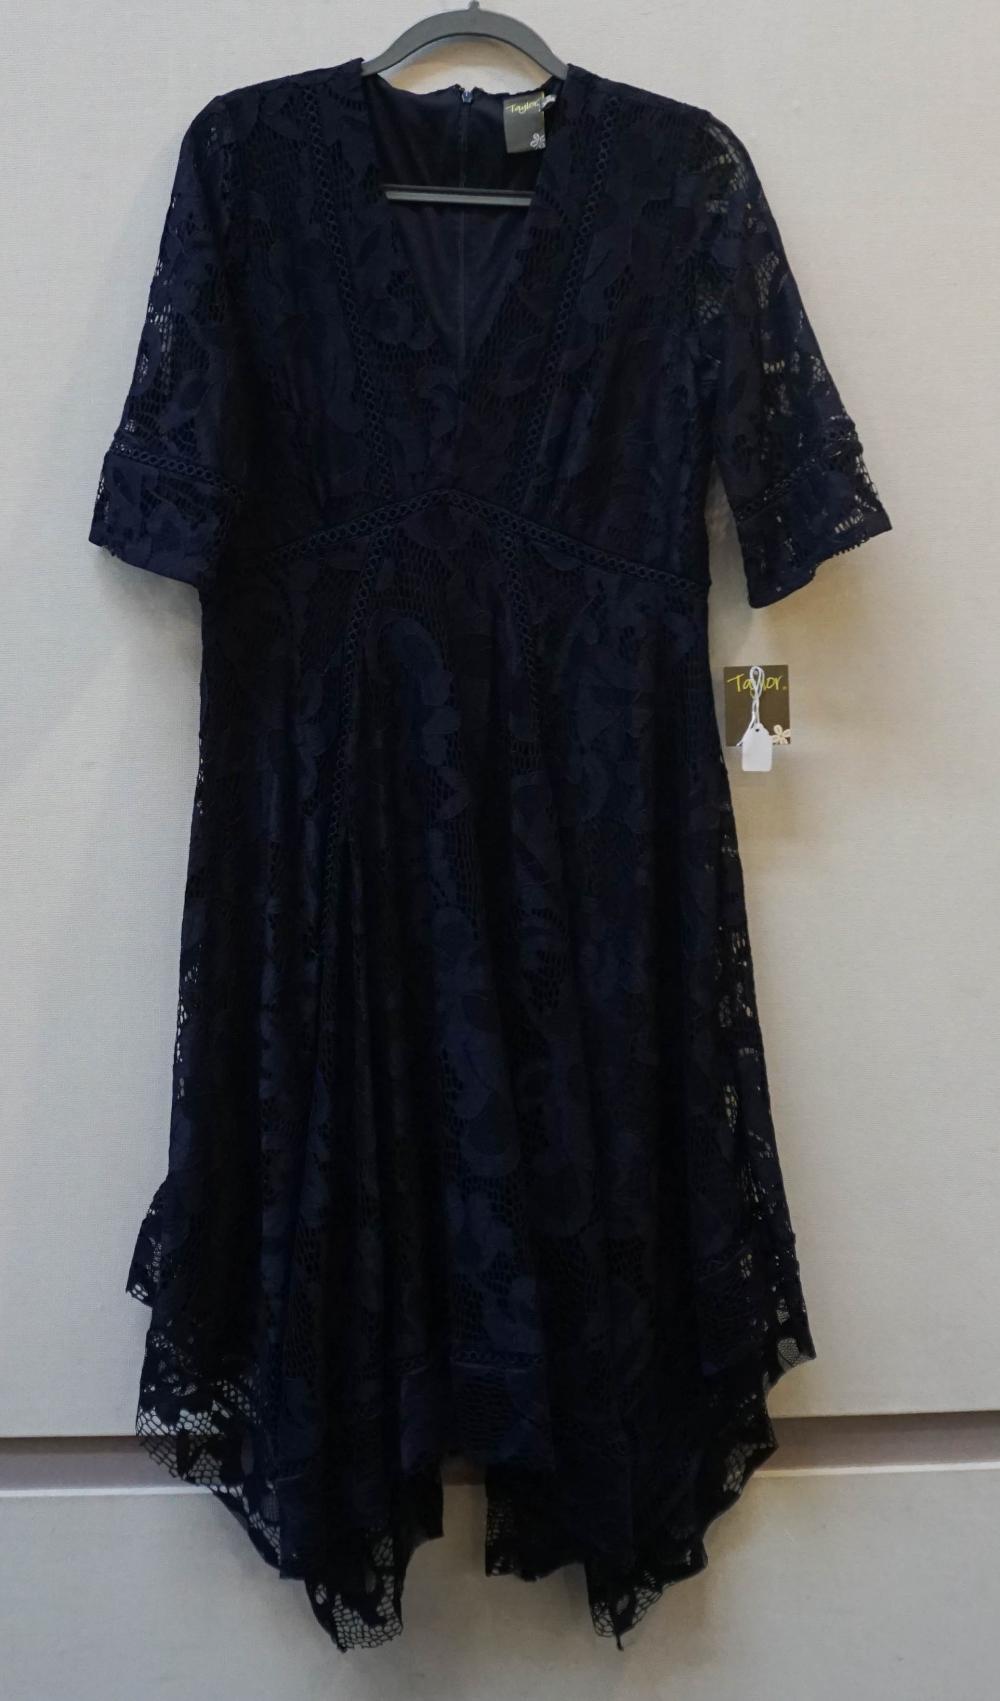 ANN TAYLOR BLUE LACE DRESS (SIZE